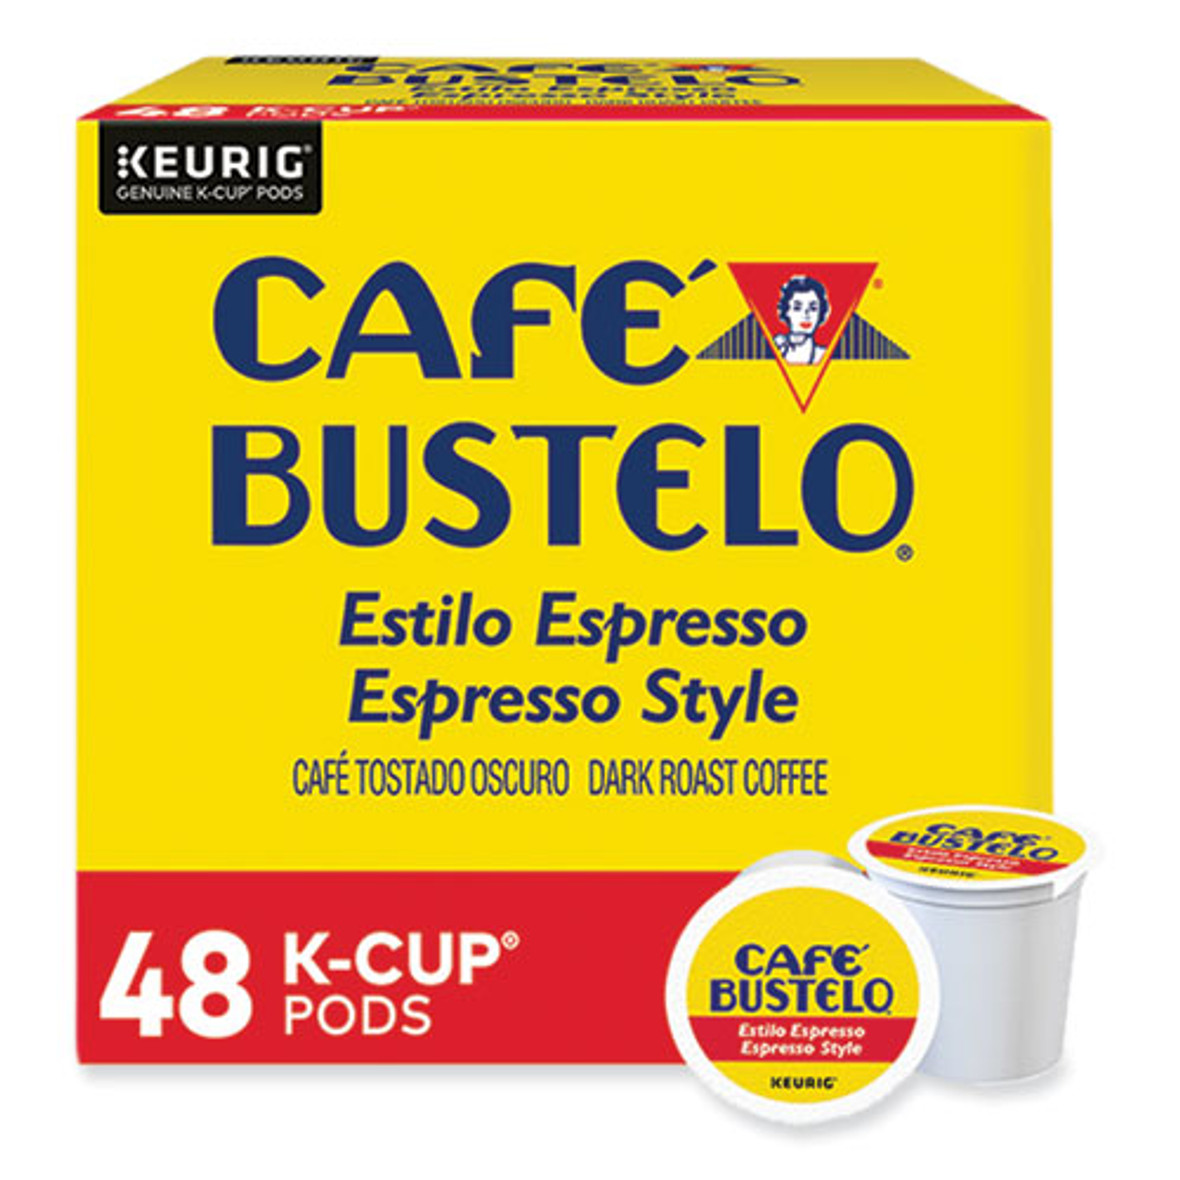 Cafe Bustelo Espresso Style K-Cups, 48/box